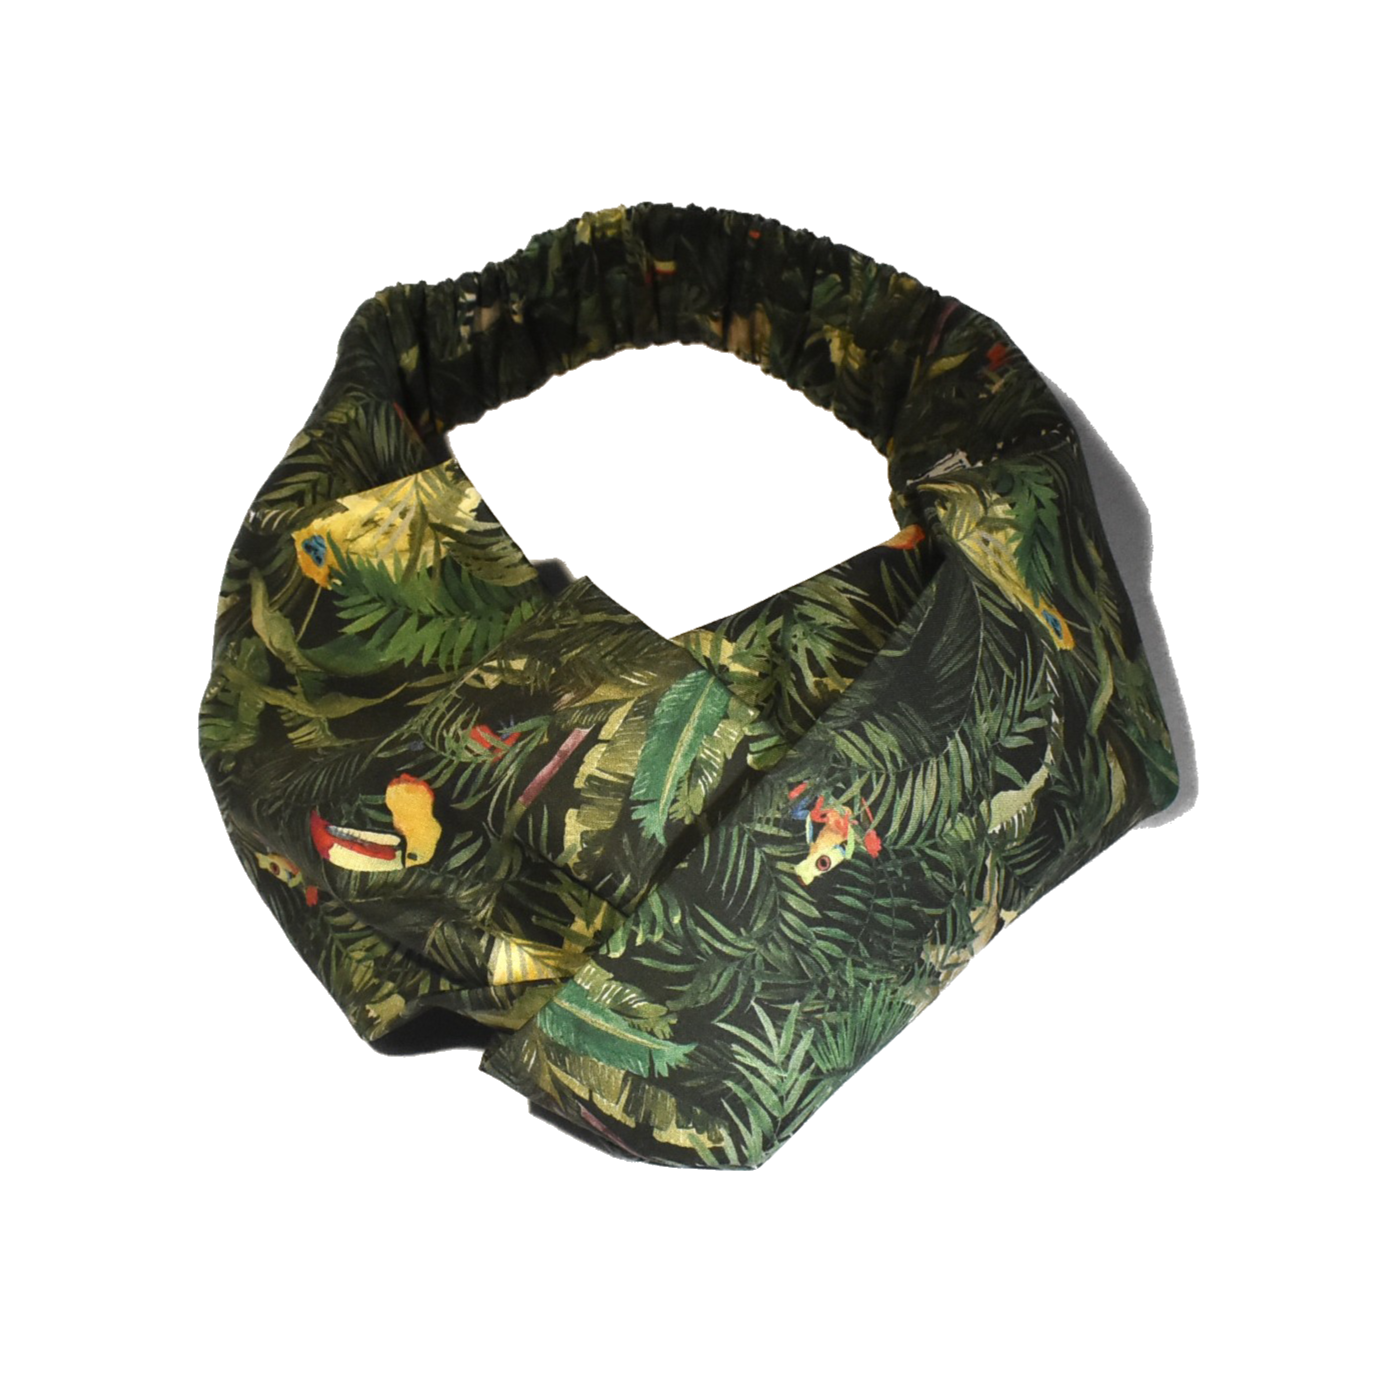 Twisted Turban Headband - Liberty of London Tou-Can Hide - Jungle Animals